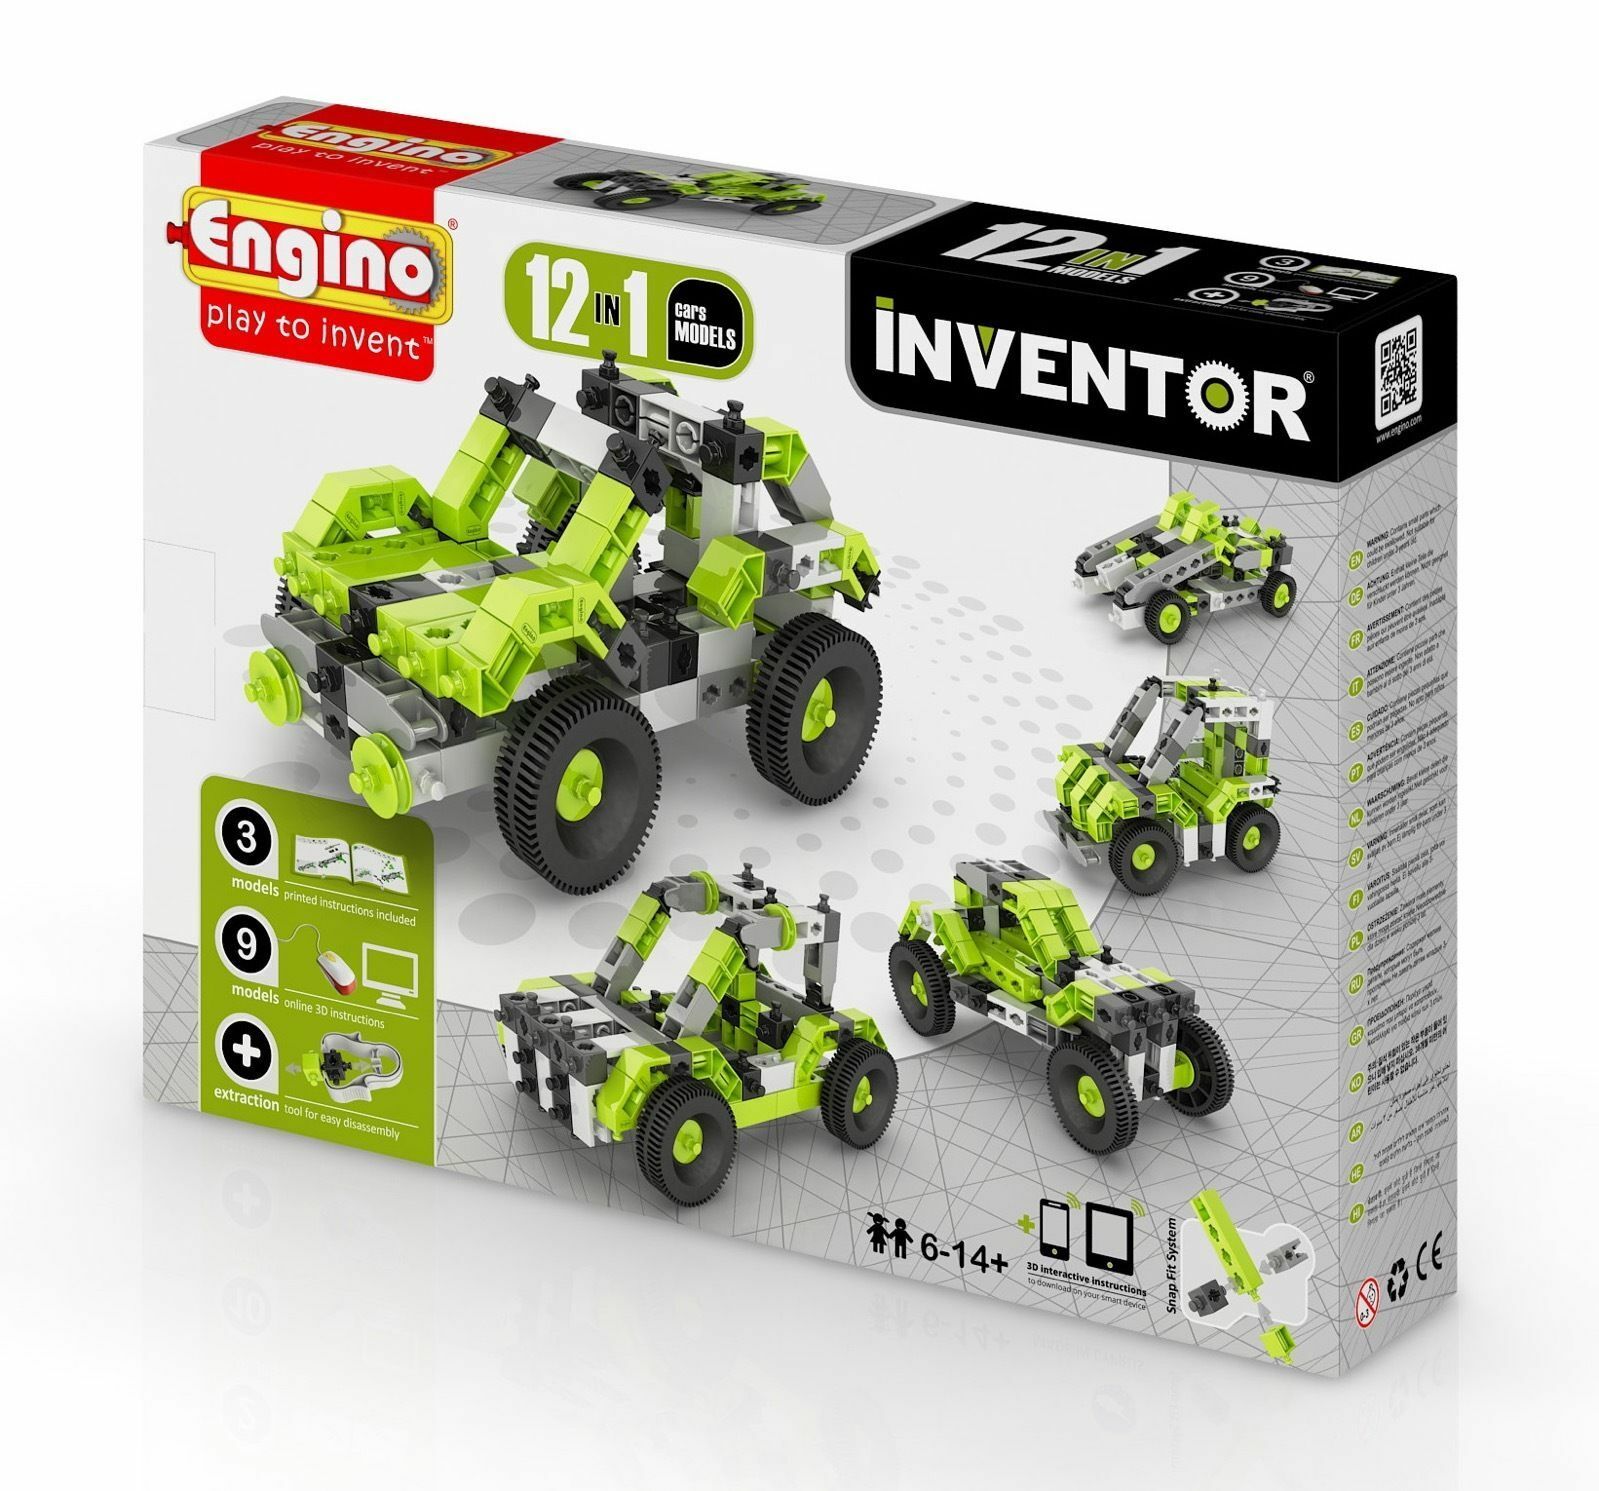 Kit constructie - Inventor - 12 Models Cars | Engino